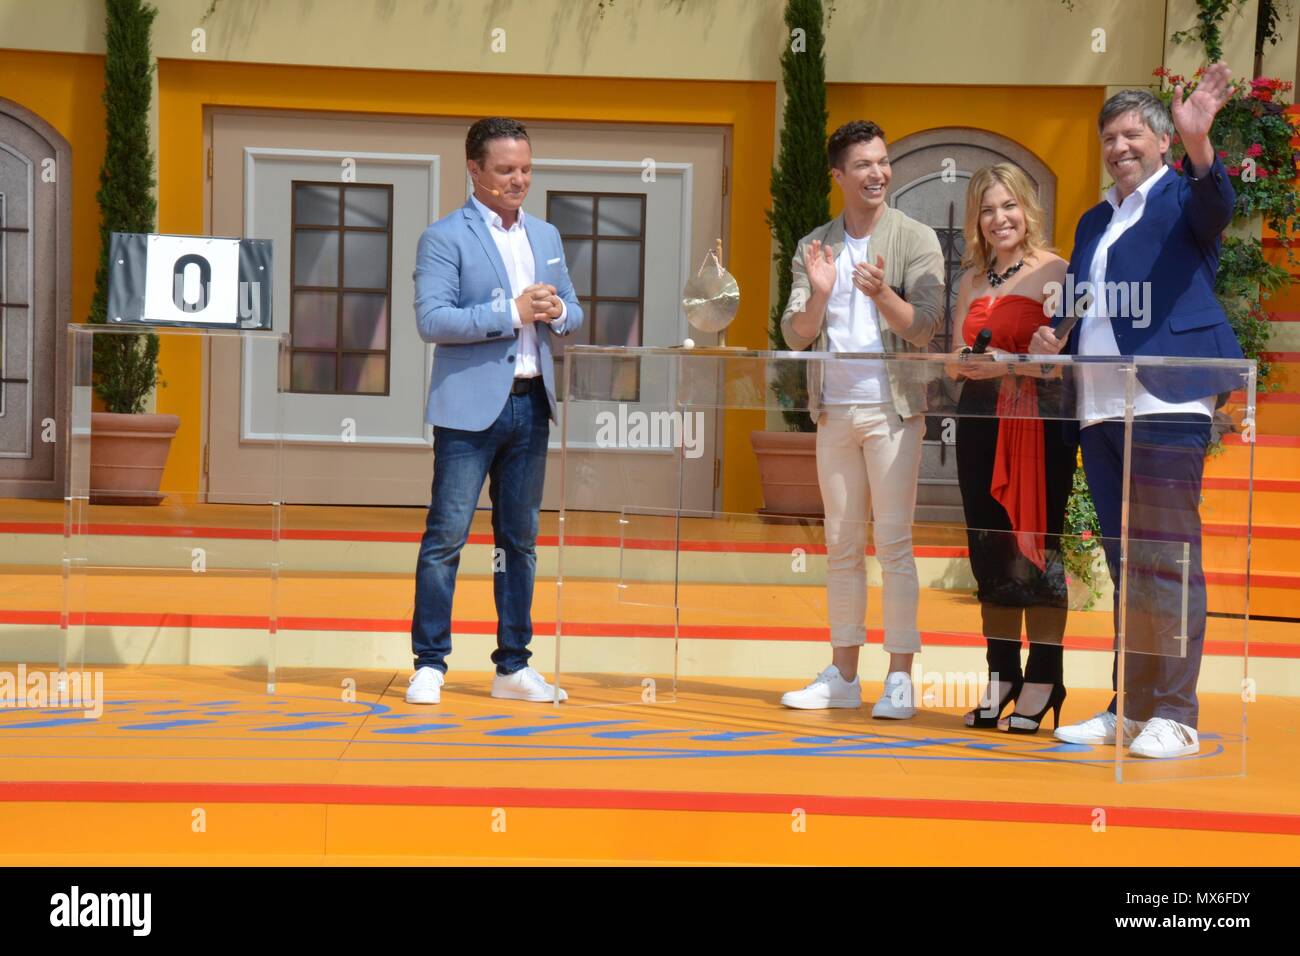 Rust, Allemagne, 3 juin 2018, Das Erste ARD TV-Show 'immer wieder Sonntags' de crédit : Europa-Park, mediensegel/Alamy Live News Banque D'Images